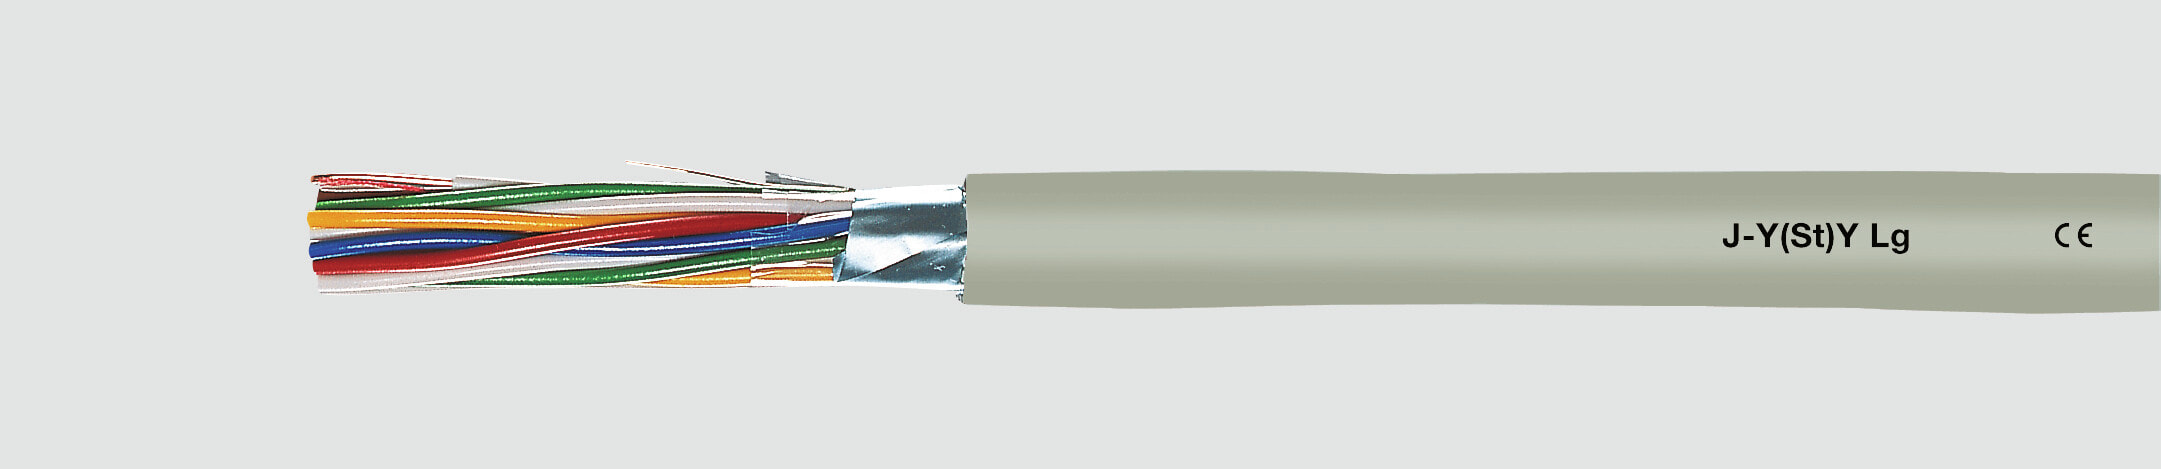 Helukabel 33003 - Low voltage cable - Grey - Polyvinyl chloride (PVC) - Cooper - 0.6 mm² - 24 kg/km